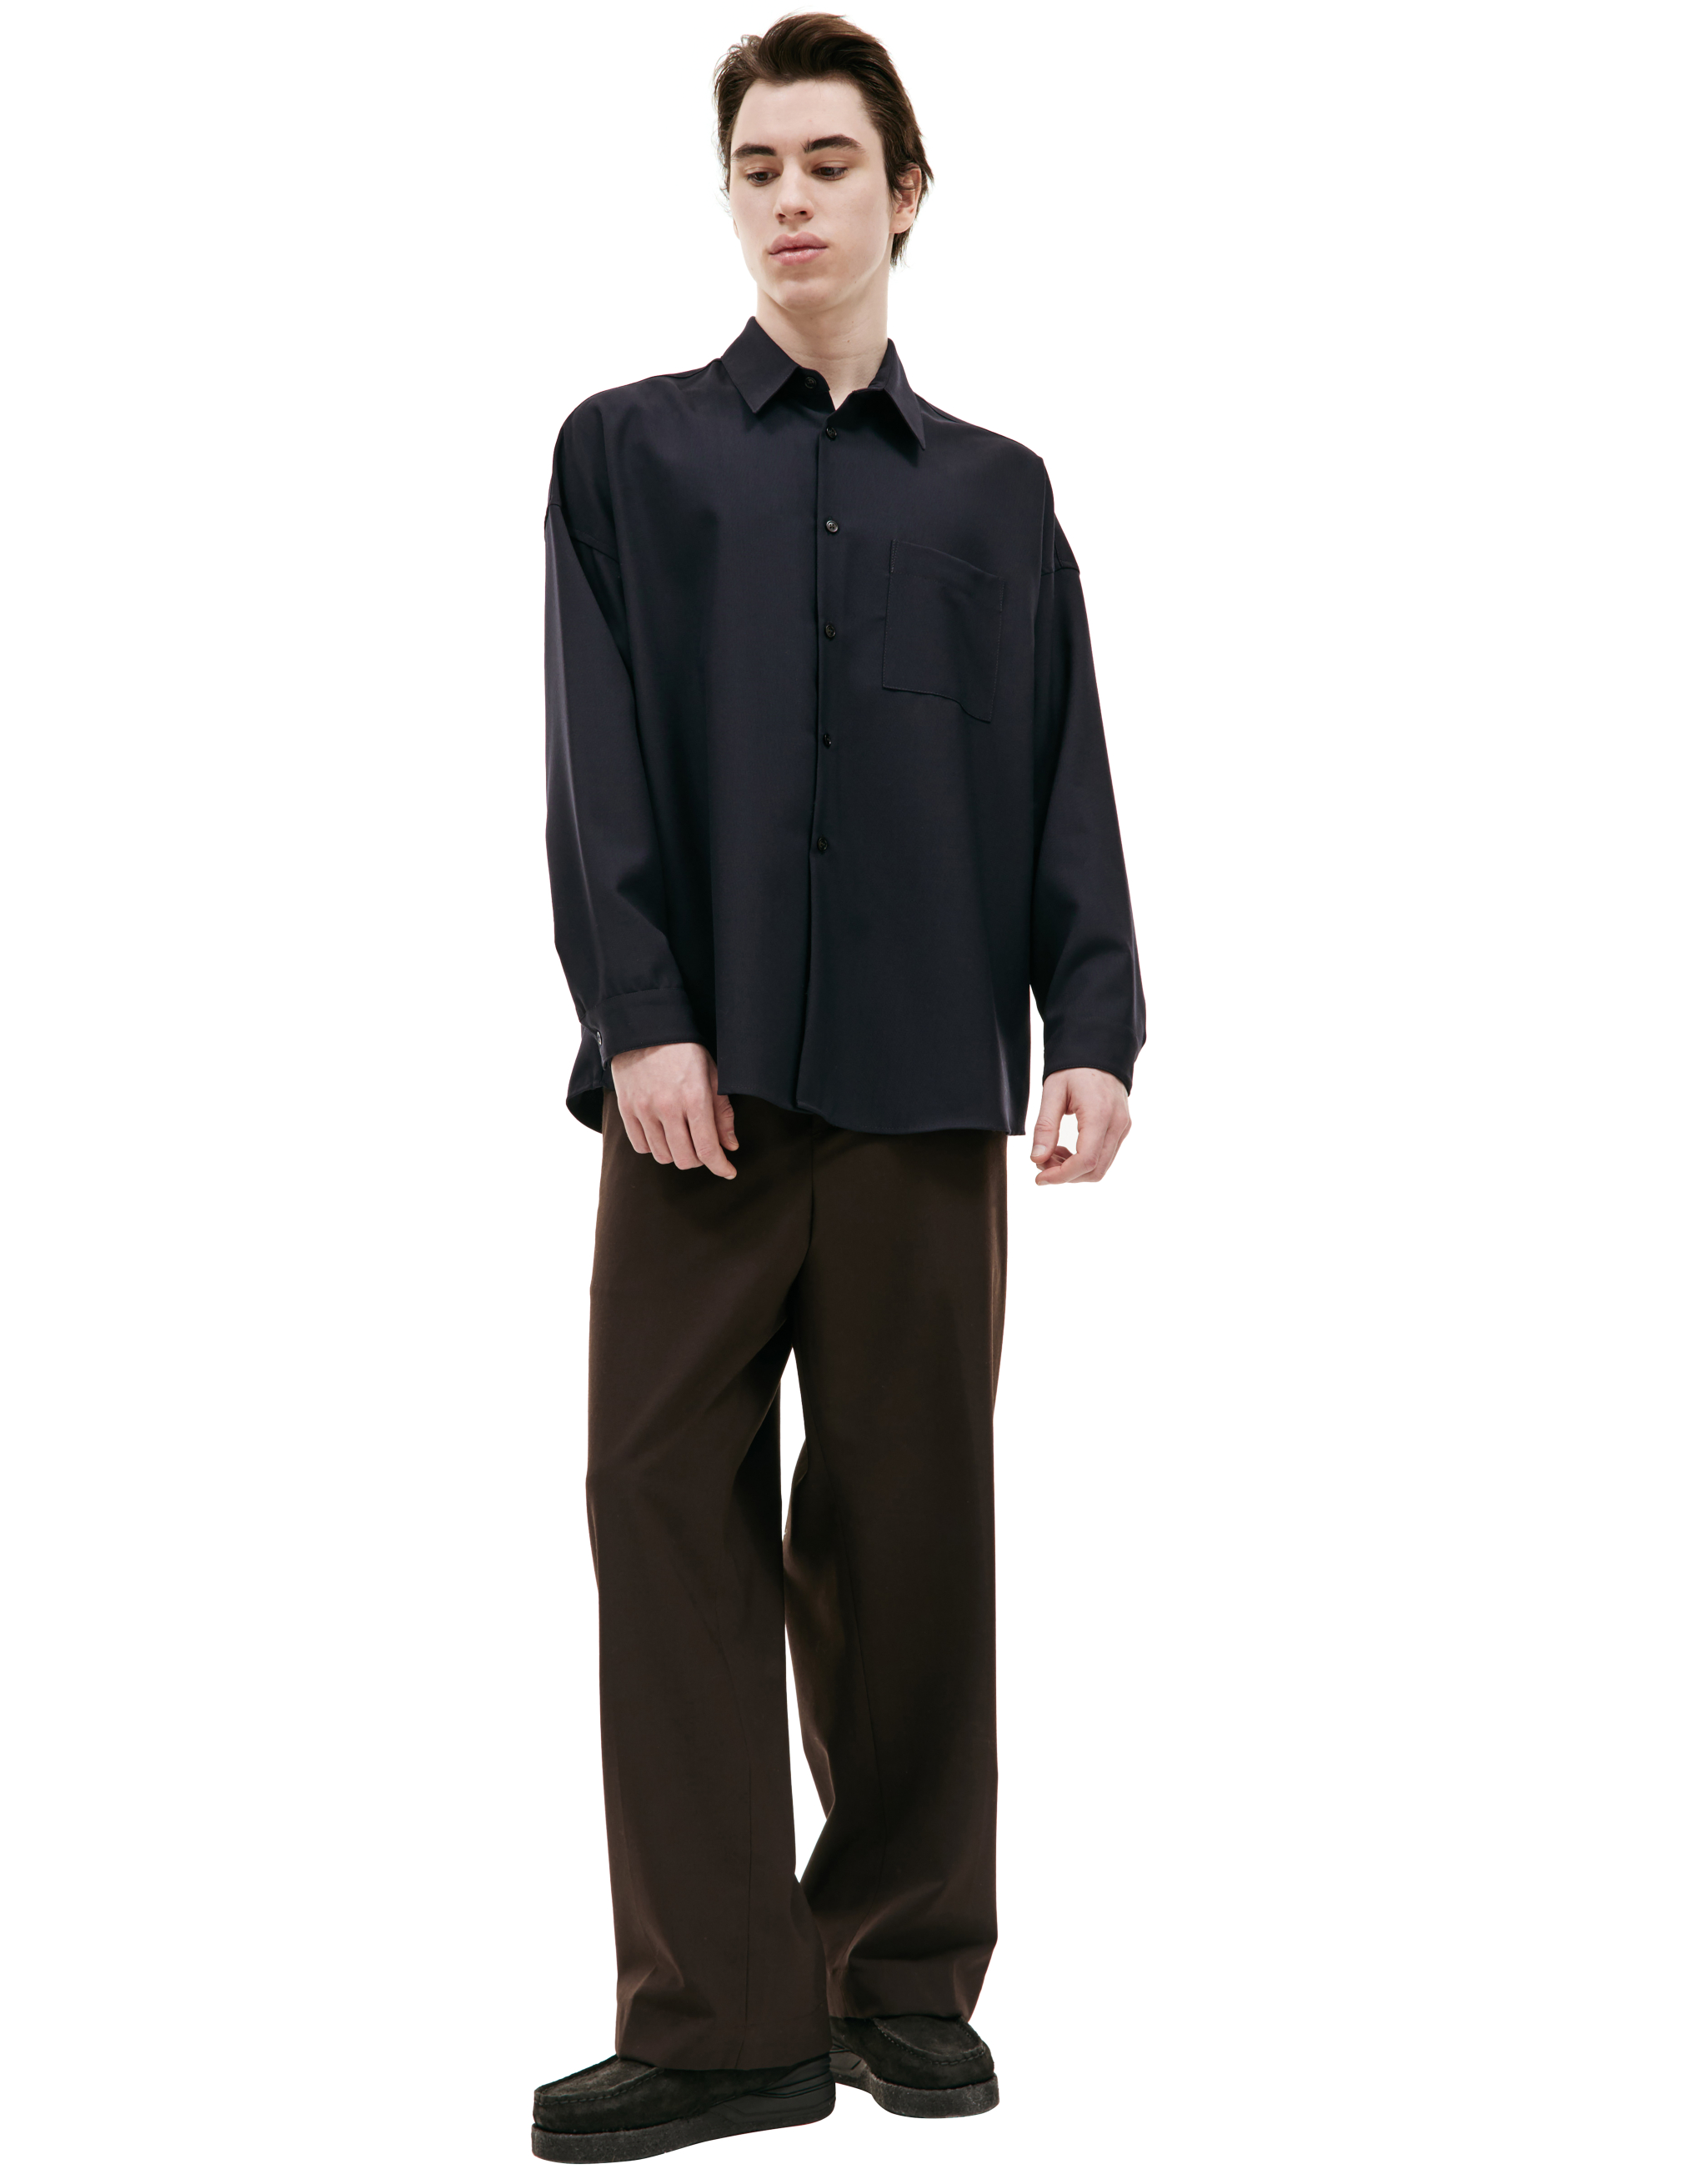 Шерстяная рубашка с накладными карманами Marni CUMU0061A3/TW839/00B99, размер 48;52 CUMU0061A3/TW839/00B99 - фото 1